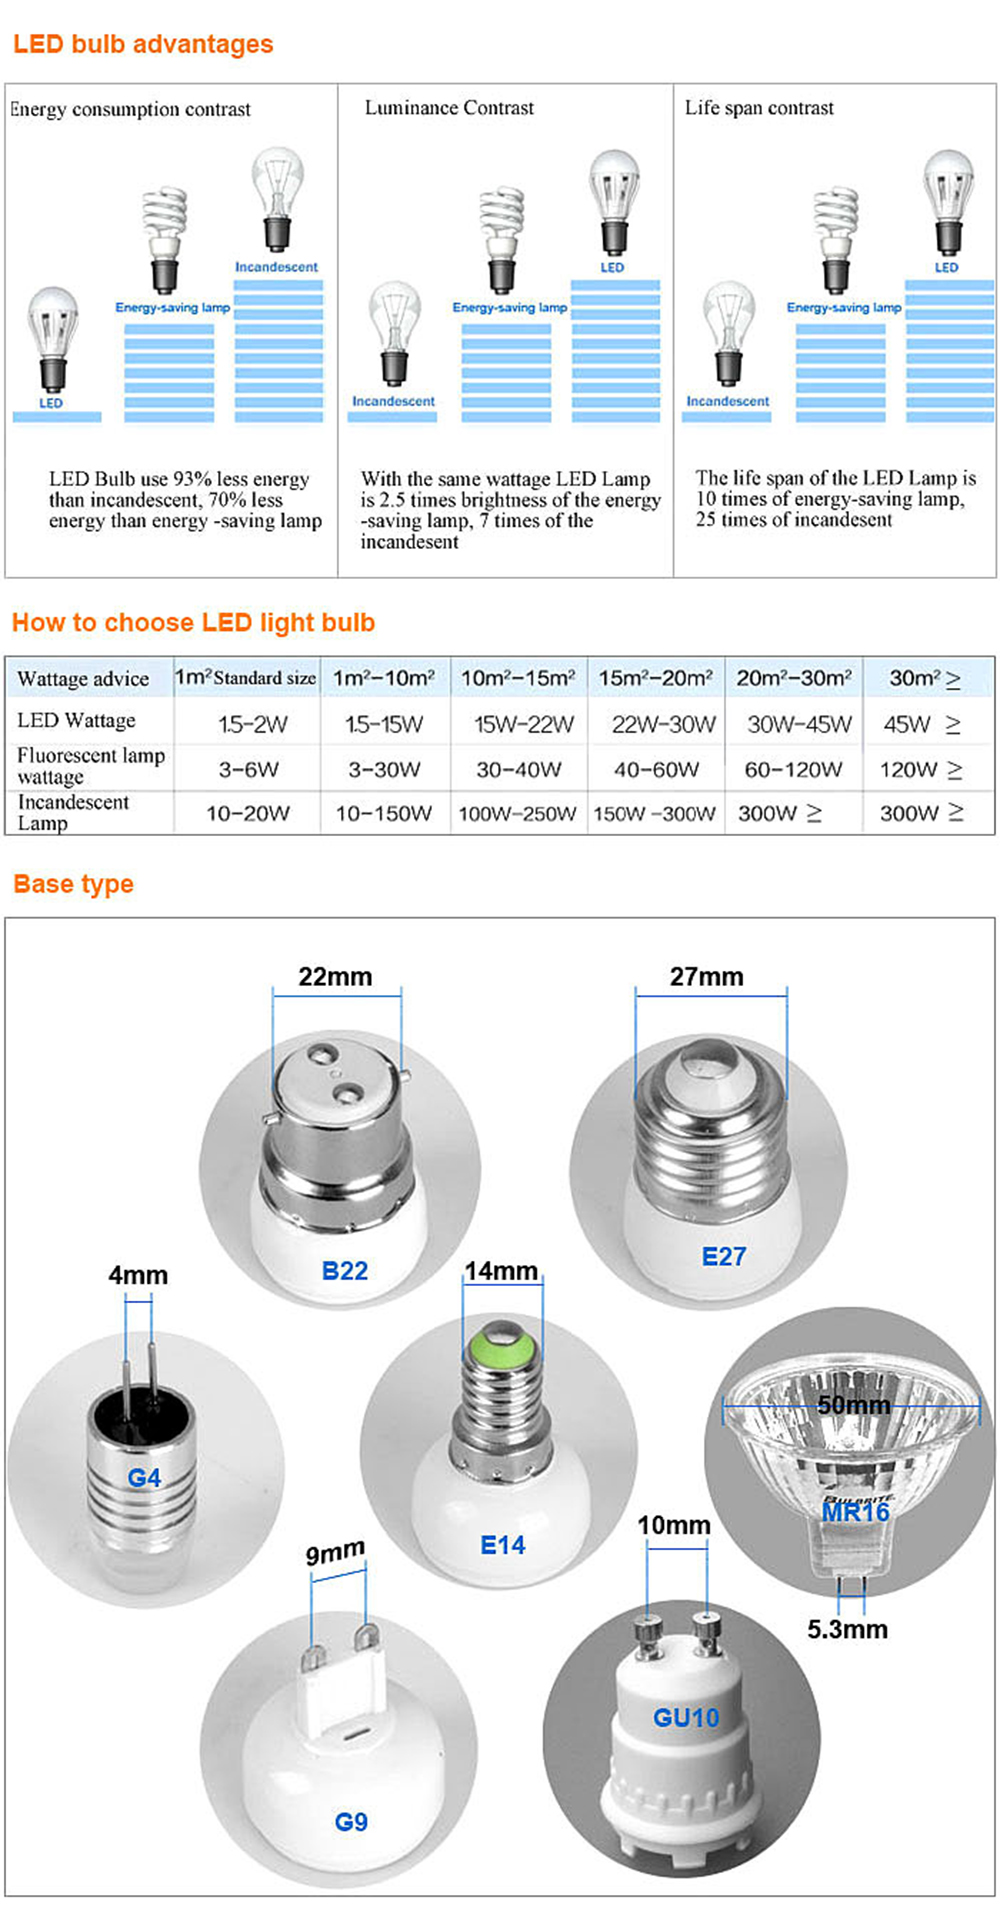 ZHENMING 5PCS 3W G9 Led Bulb Dimmable AC110V 3014 SMD 64 - LED Mini Corn Bulb